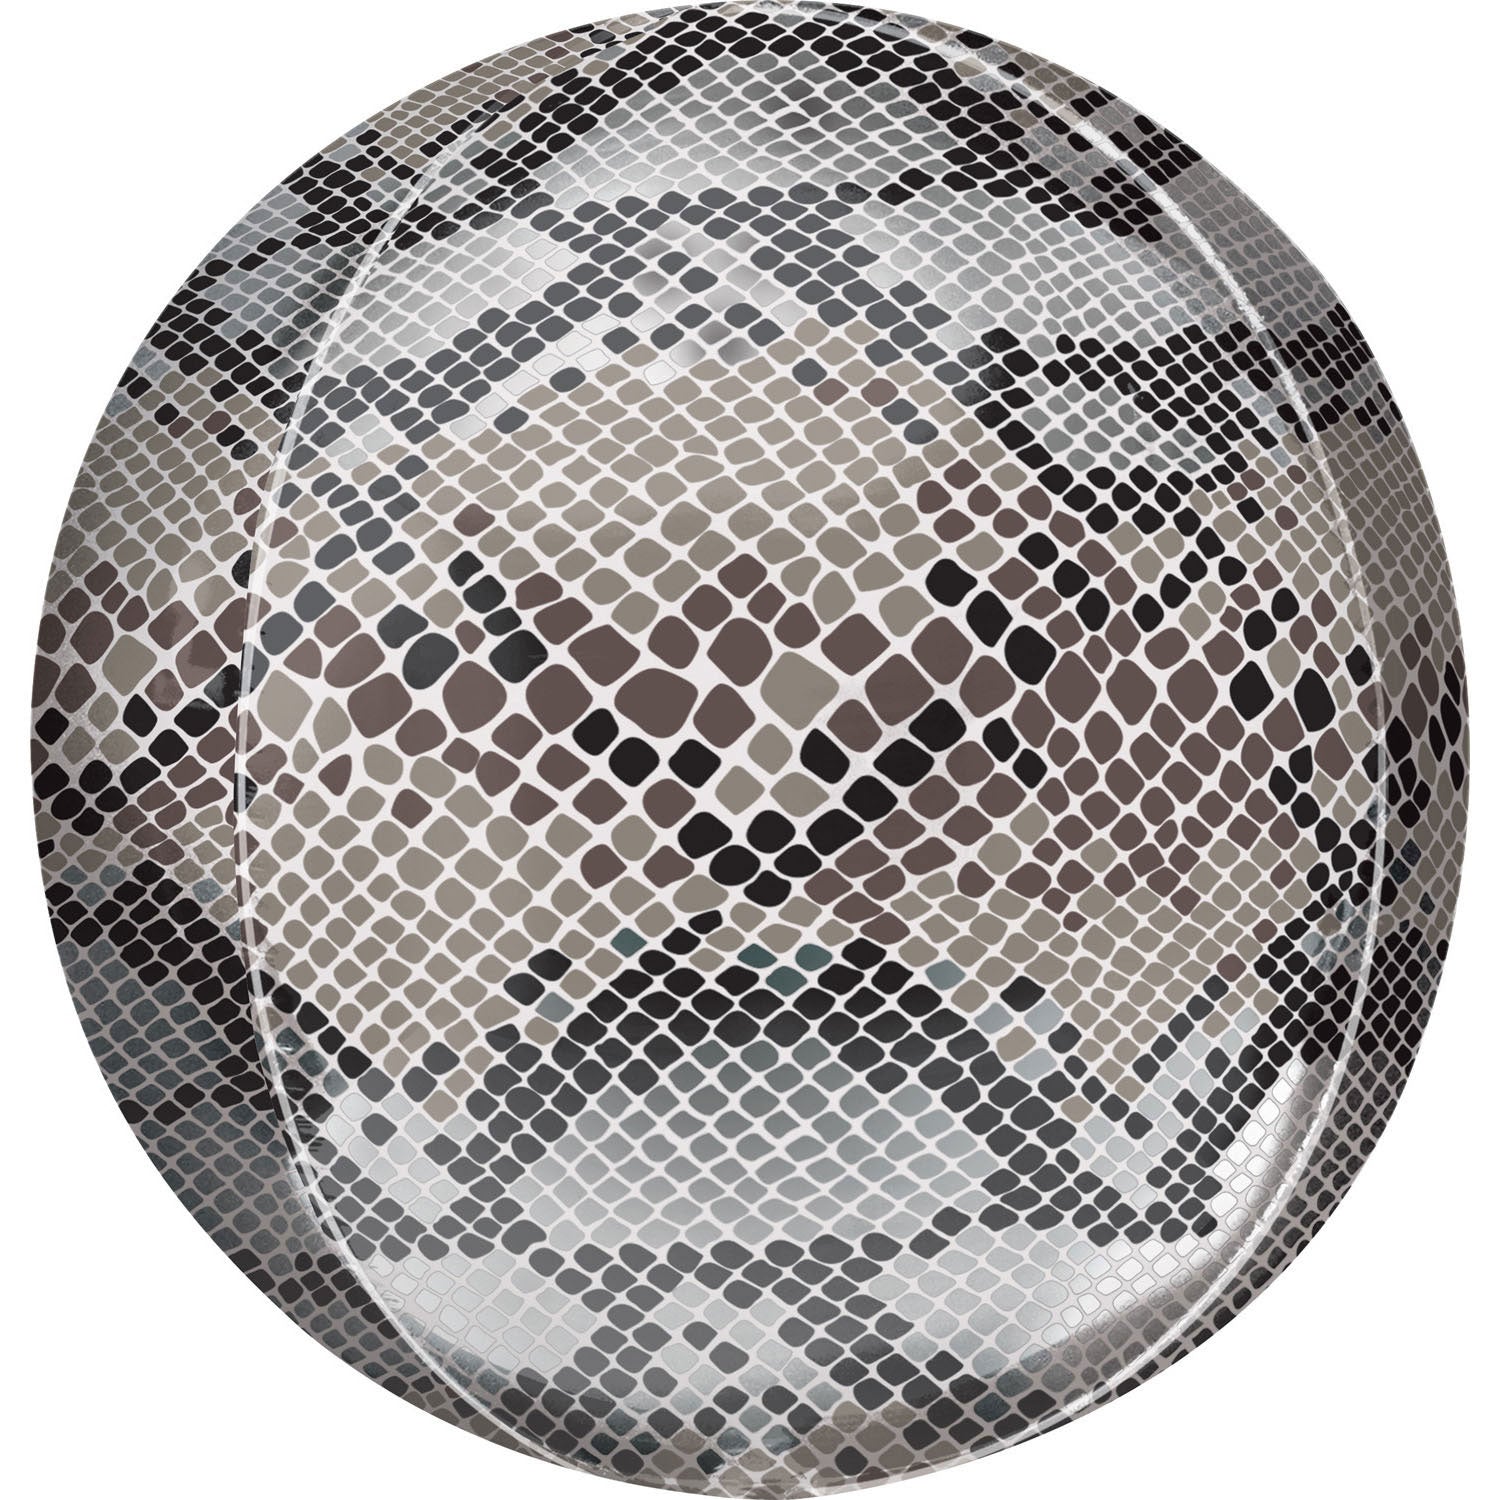 Spherical balloon with snake skin design